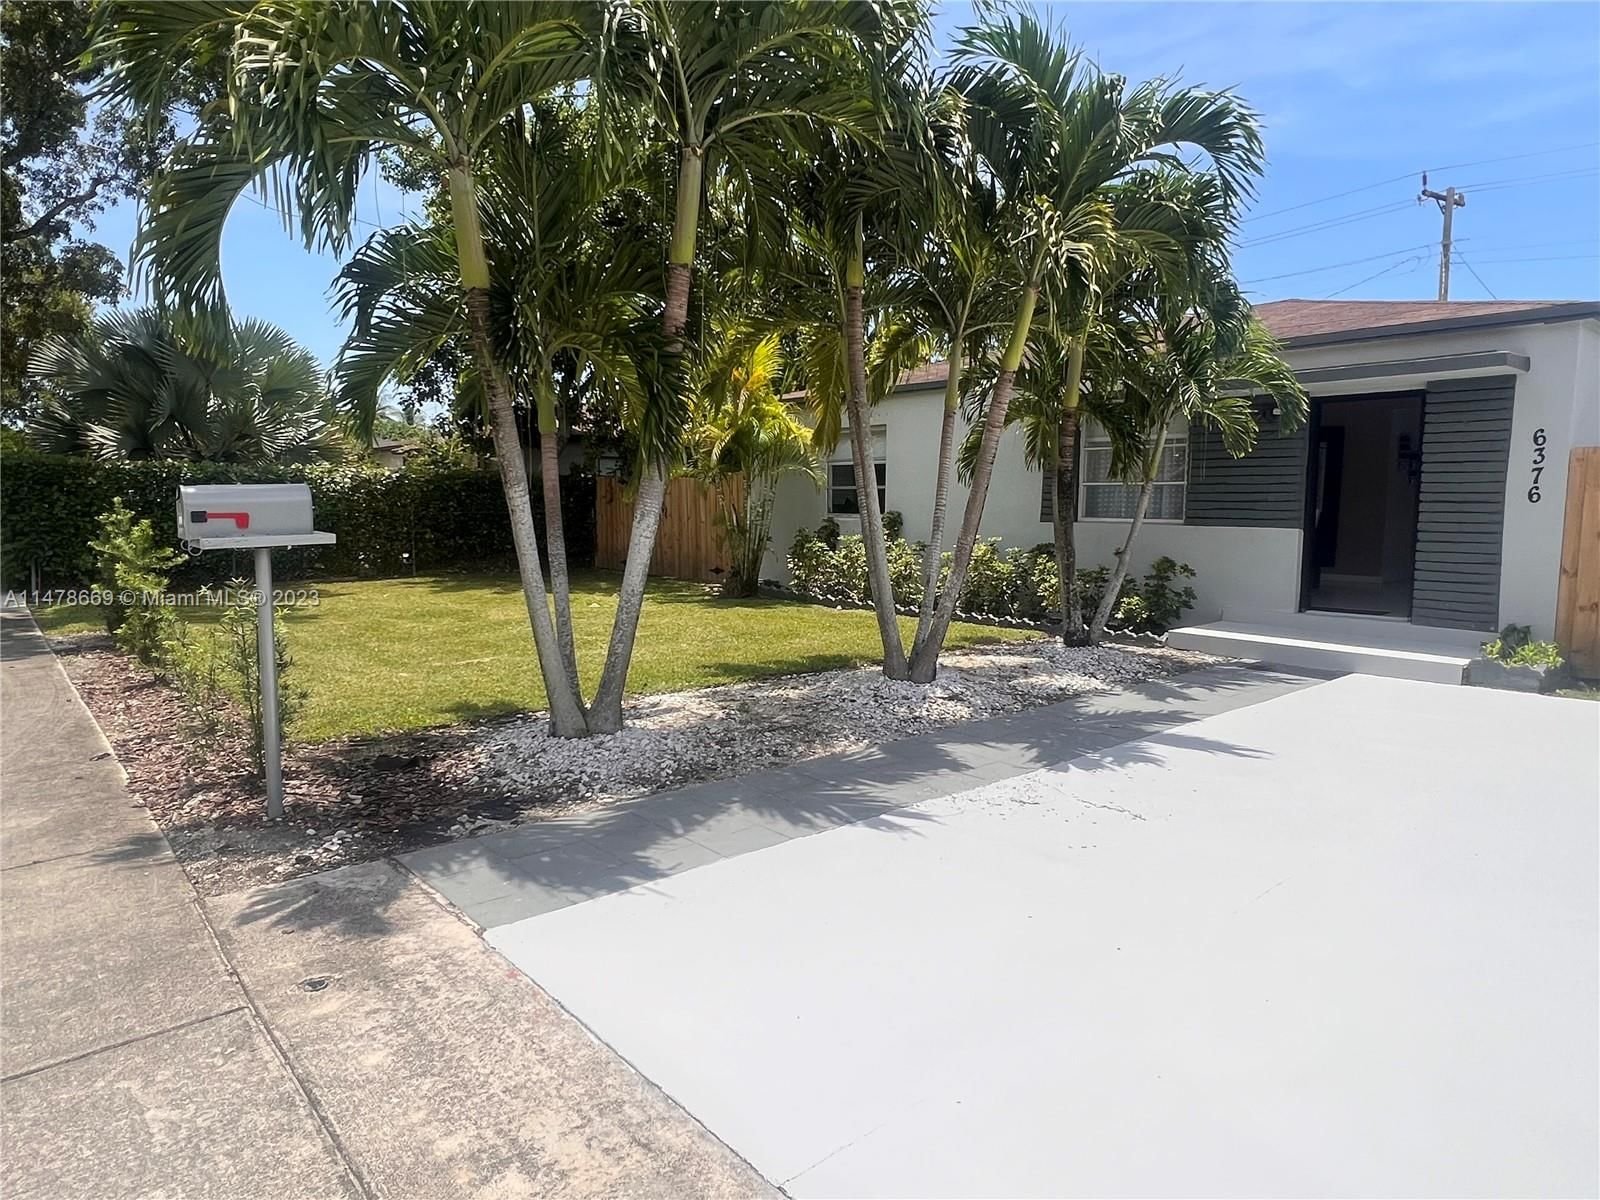 Real estate property located at 6376 39th ST, Miami-Dade County, Miami, FL